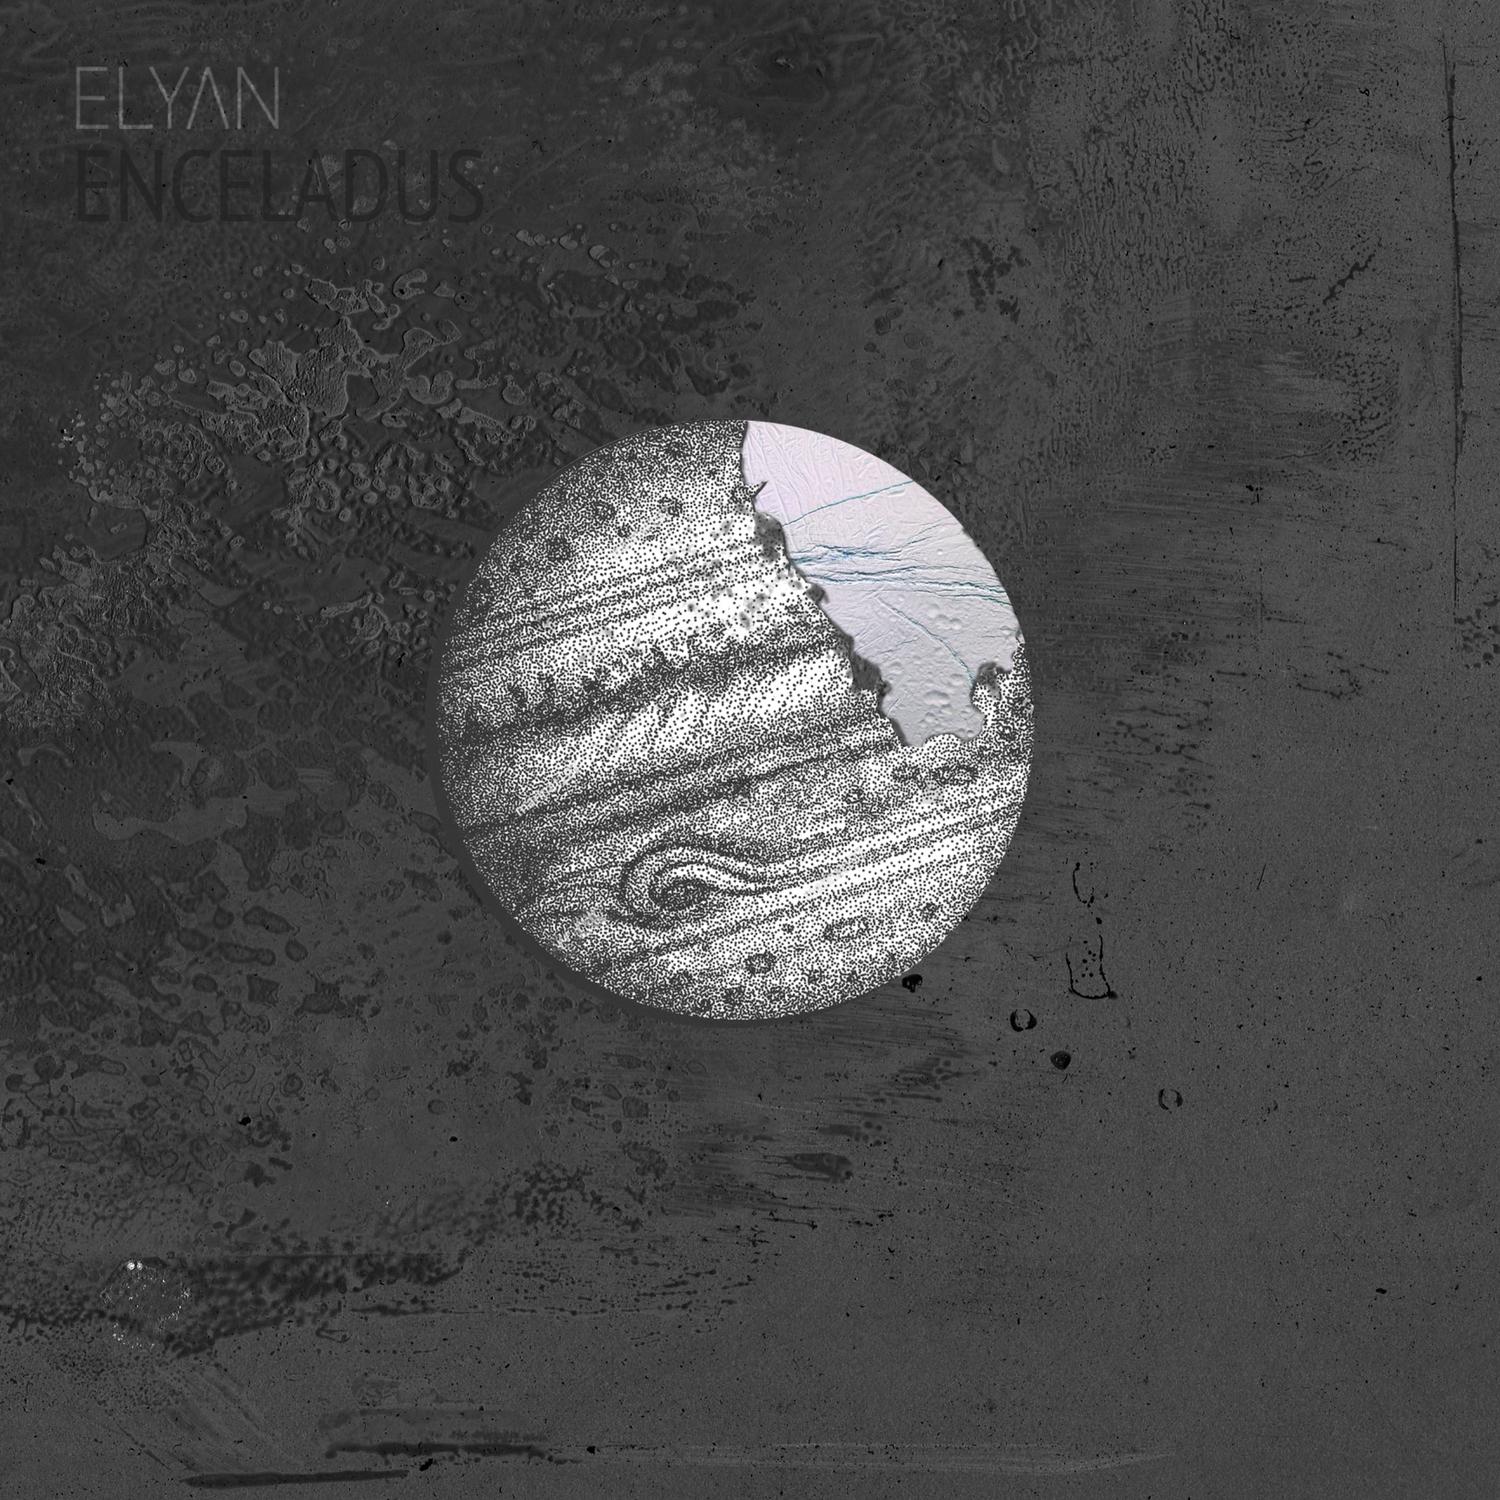 Elyan - Enceladus